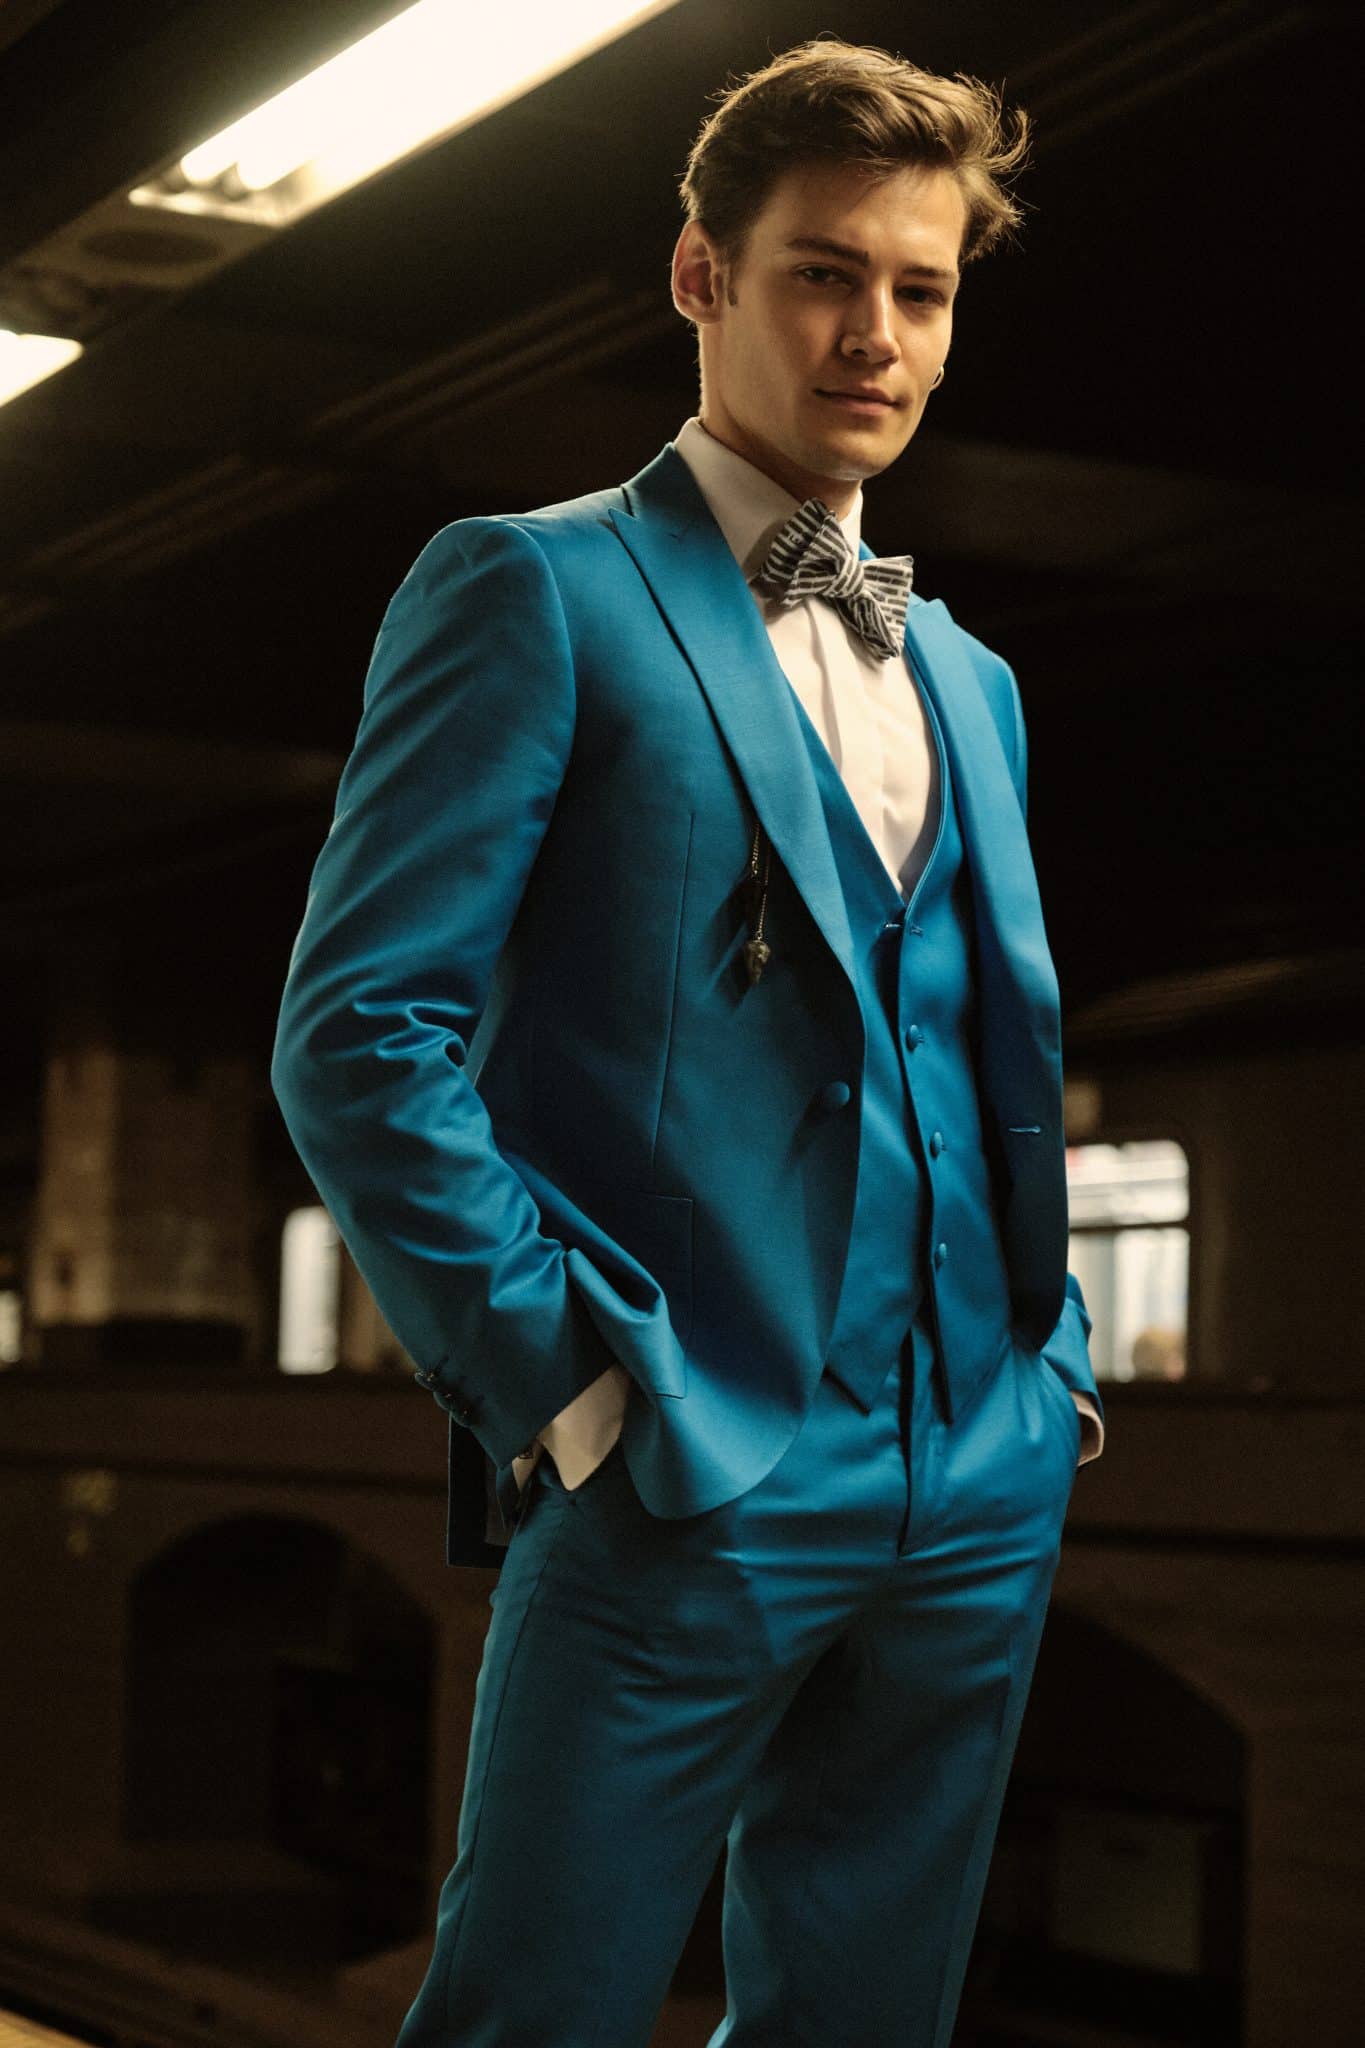 Gentleman models Central Florida's Leonardo 5th Avenue cobalt blue modern suit with vest and bowtie